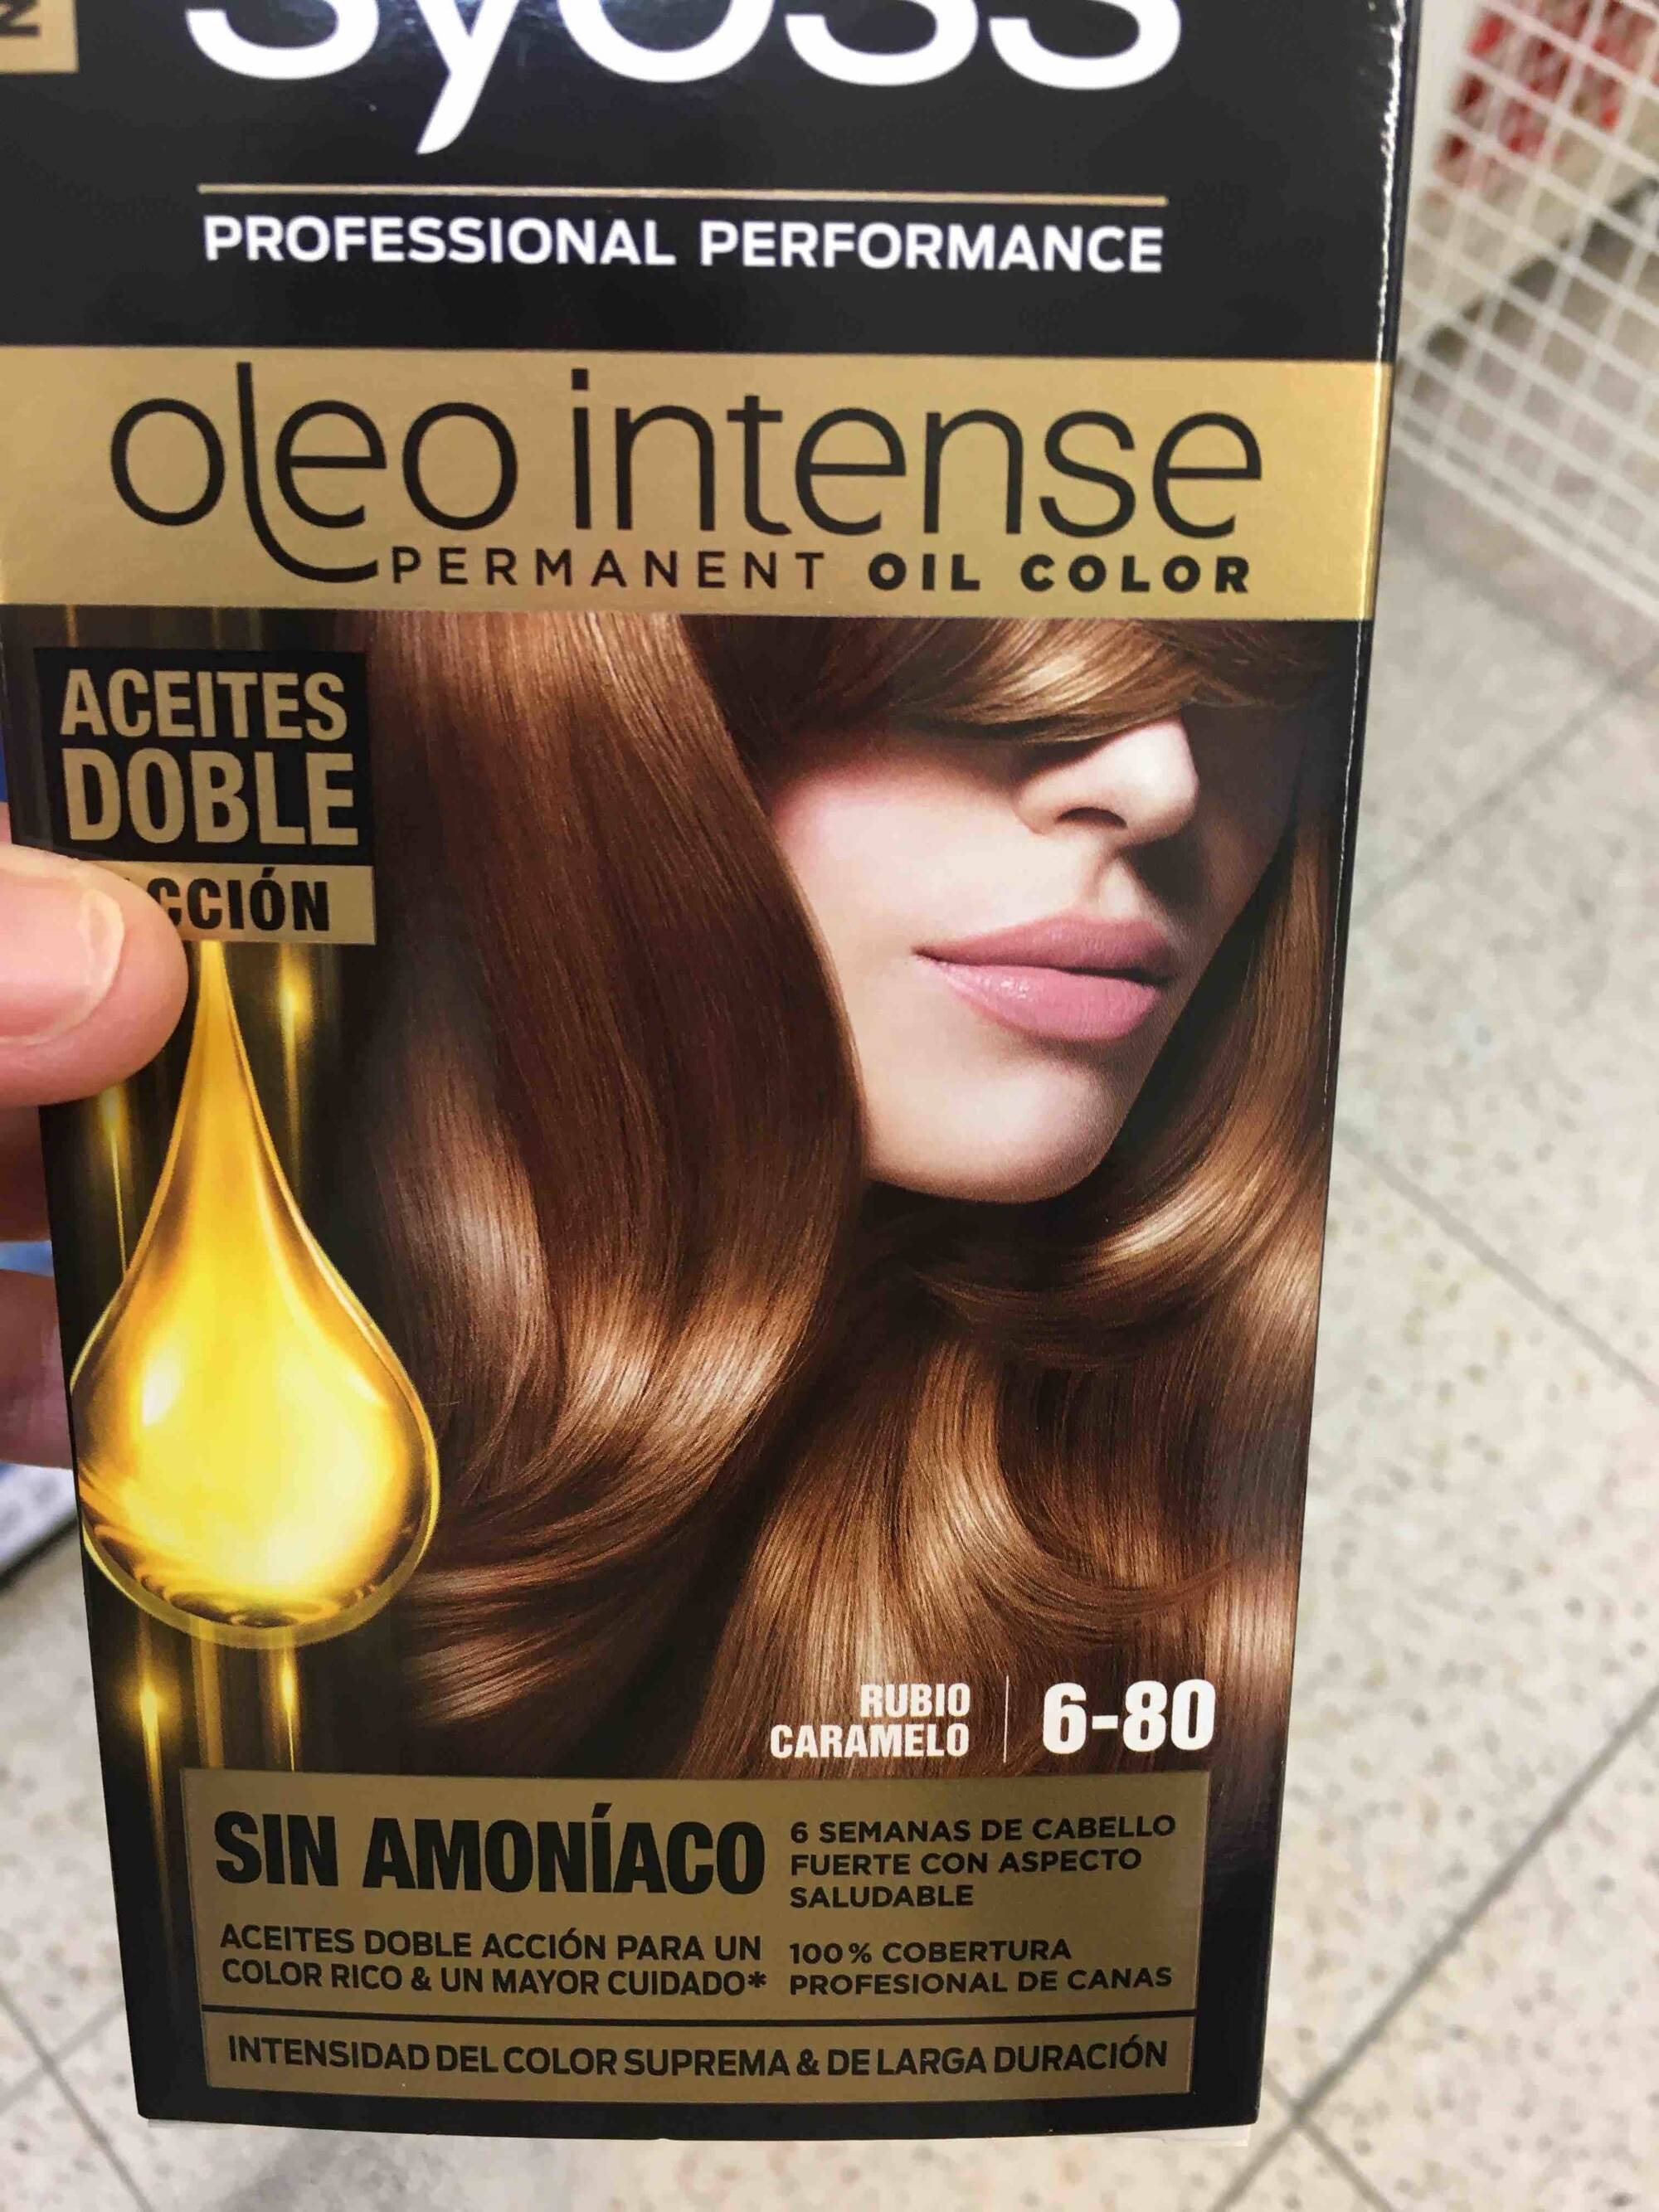 SYOSS - Oleo intense - Permanent oil color 6-80 rubio caramelo